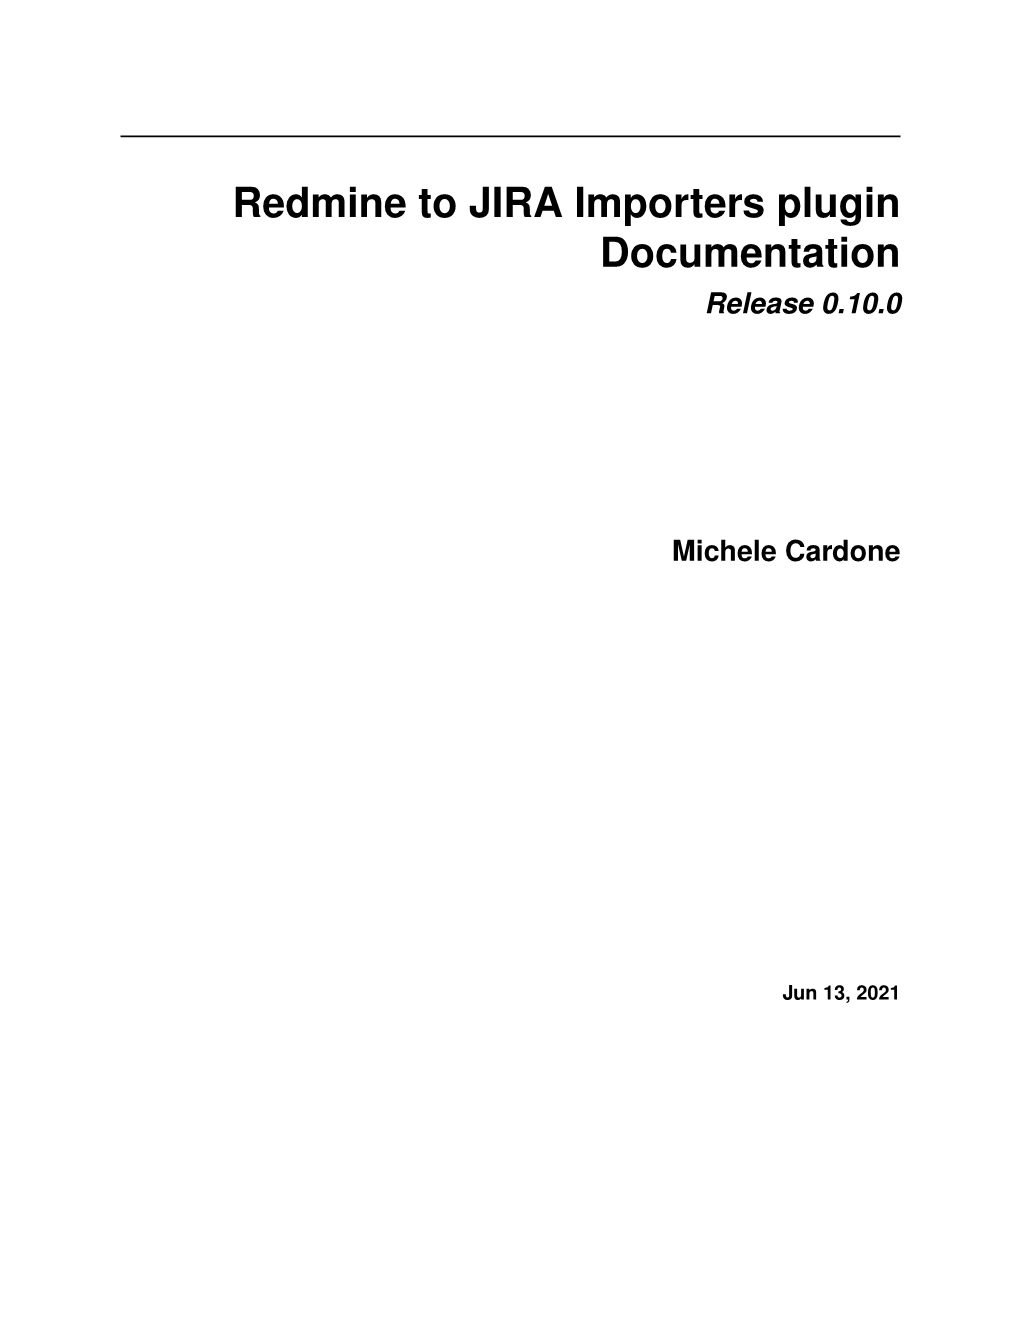 Redmine to JIRA Importers Plugin Documentation Release 0.10.0